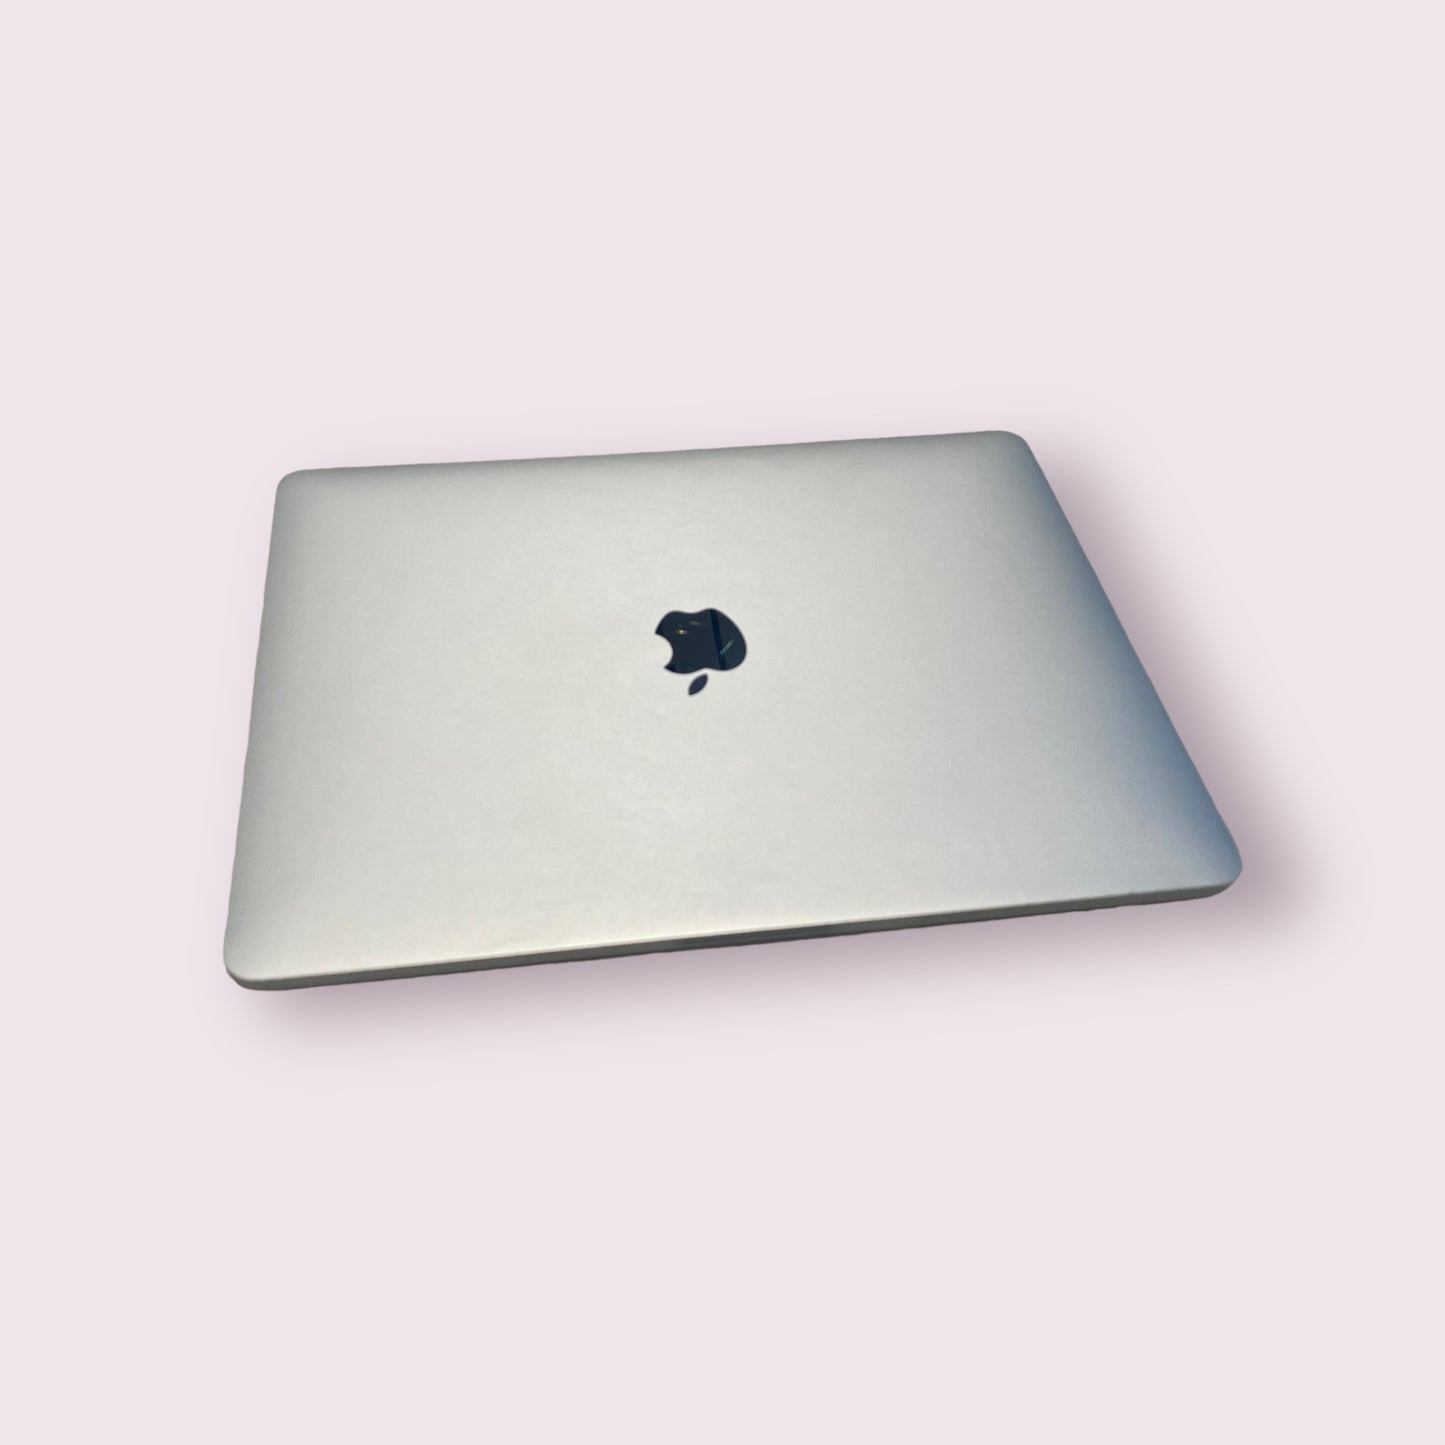 Apple Macbook pro 13" retina A1708 2017 Silver - 8GB RAM, i5 @ 2.3GHz 256GB SSD Mac OS Ventura